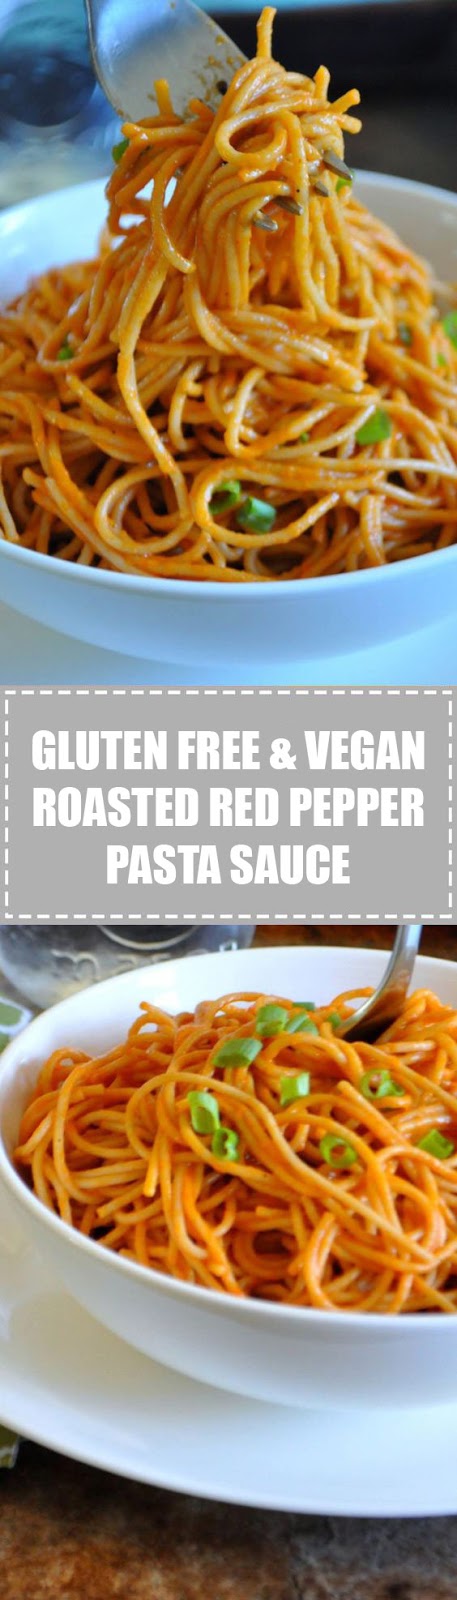 Gluten Free & Vegan Roasted Red Pepper Pasta Sauce